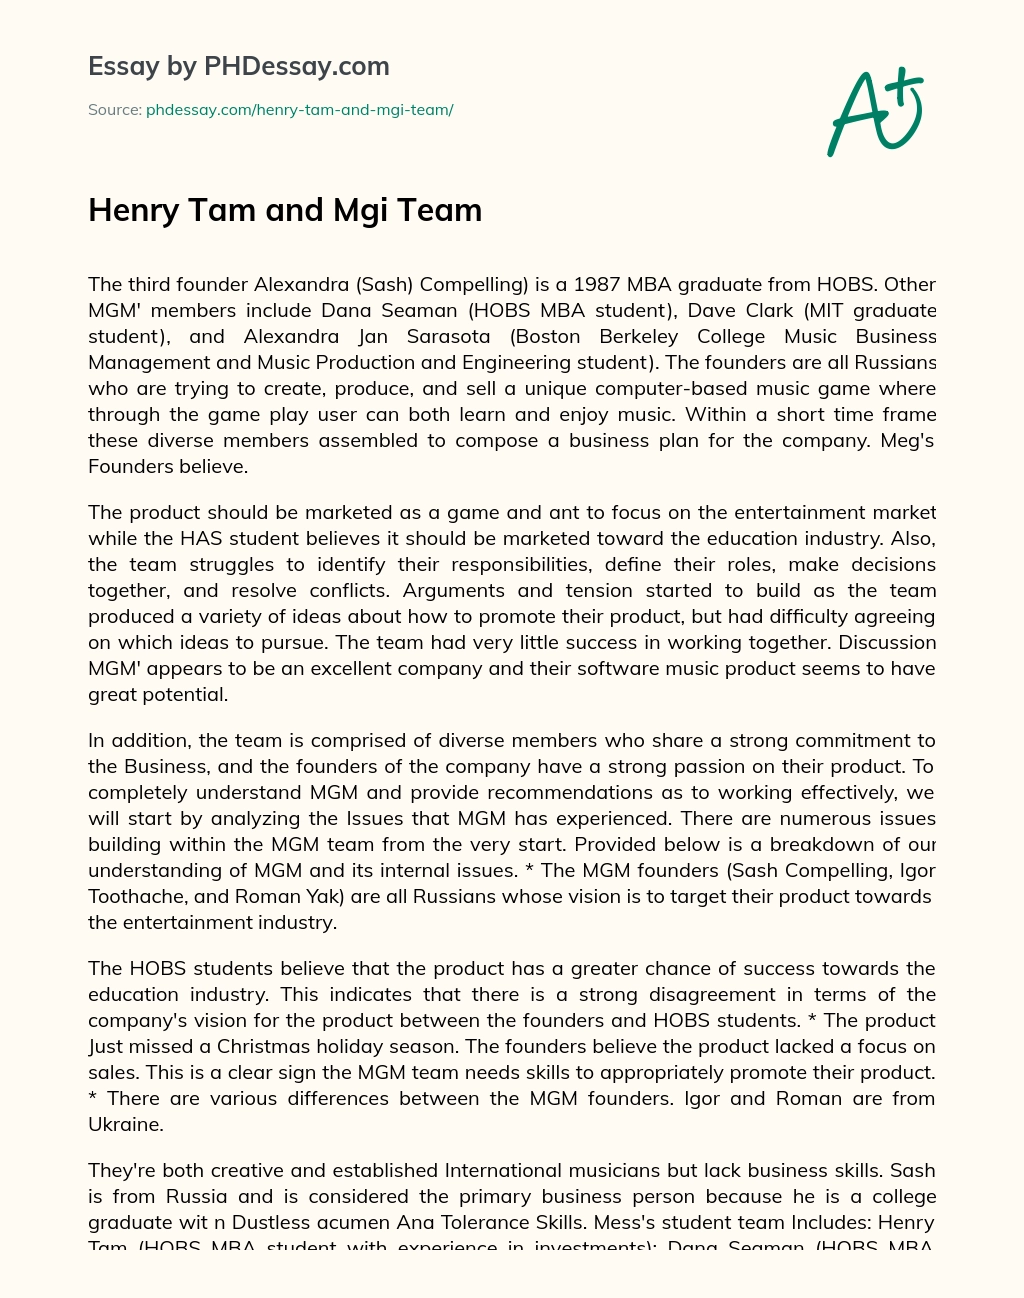 Henry Tam and Mgi Team essay